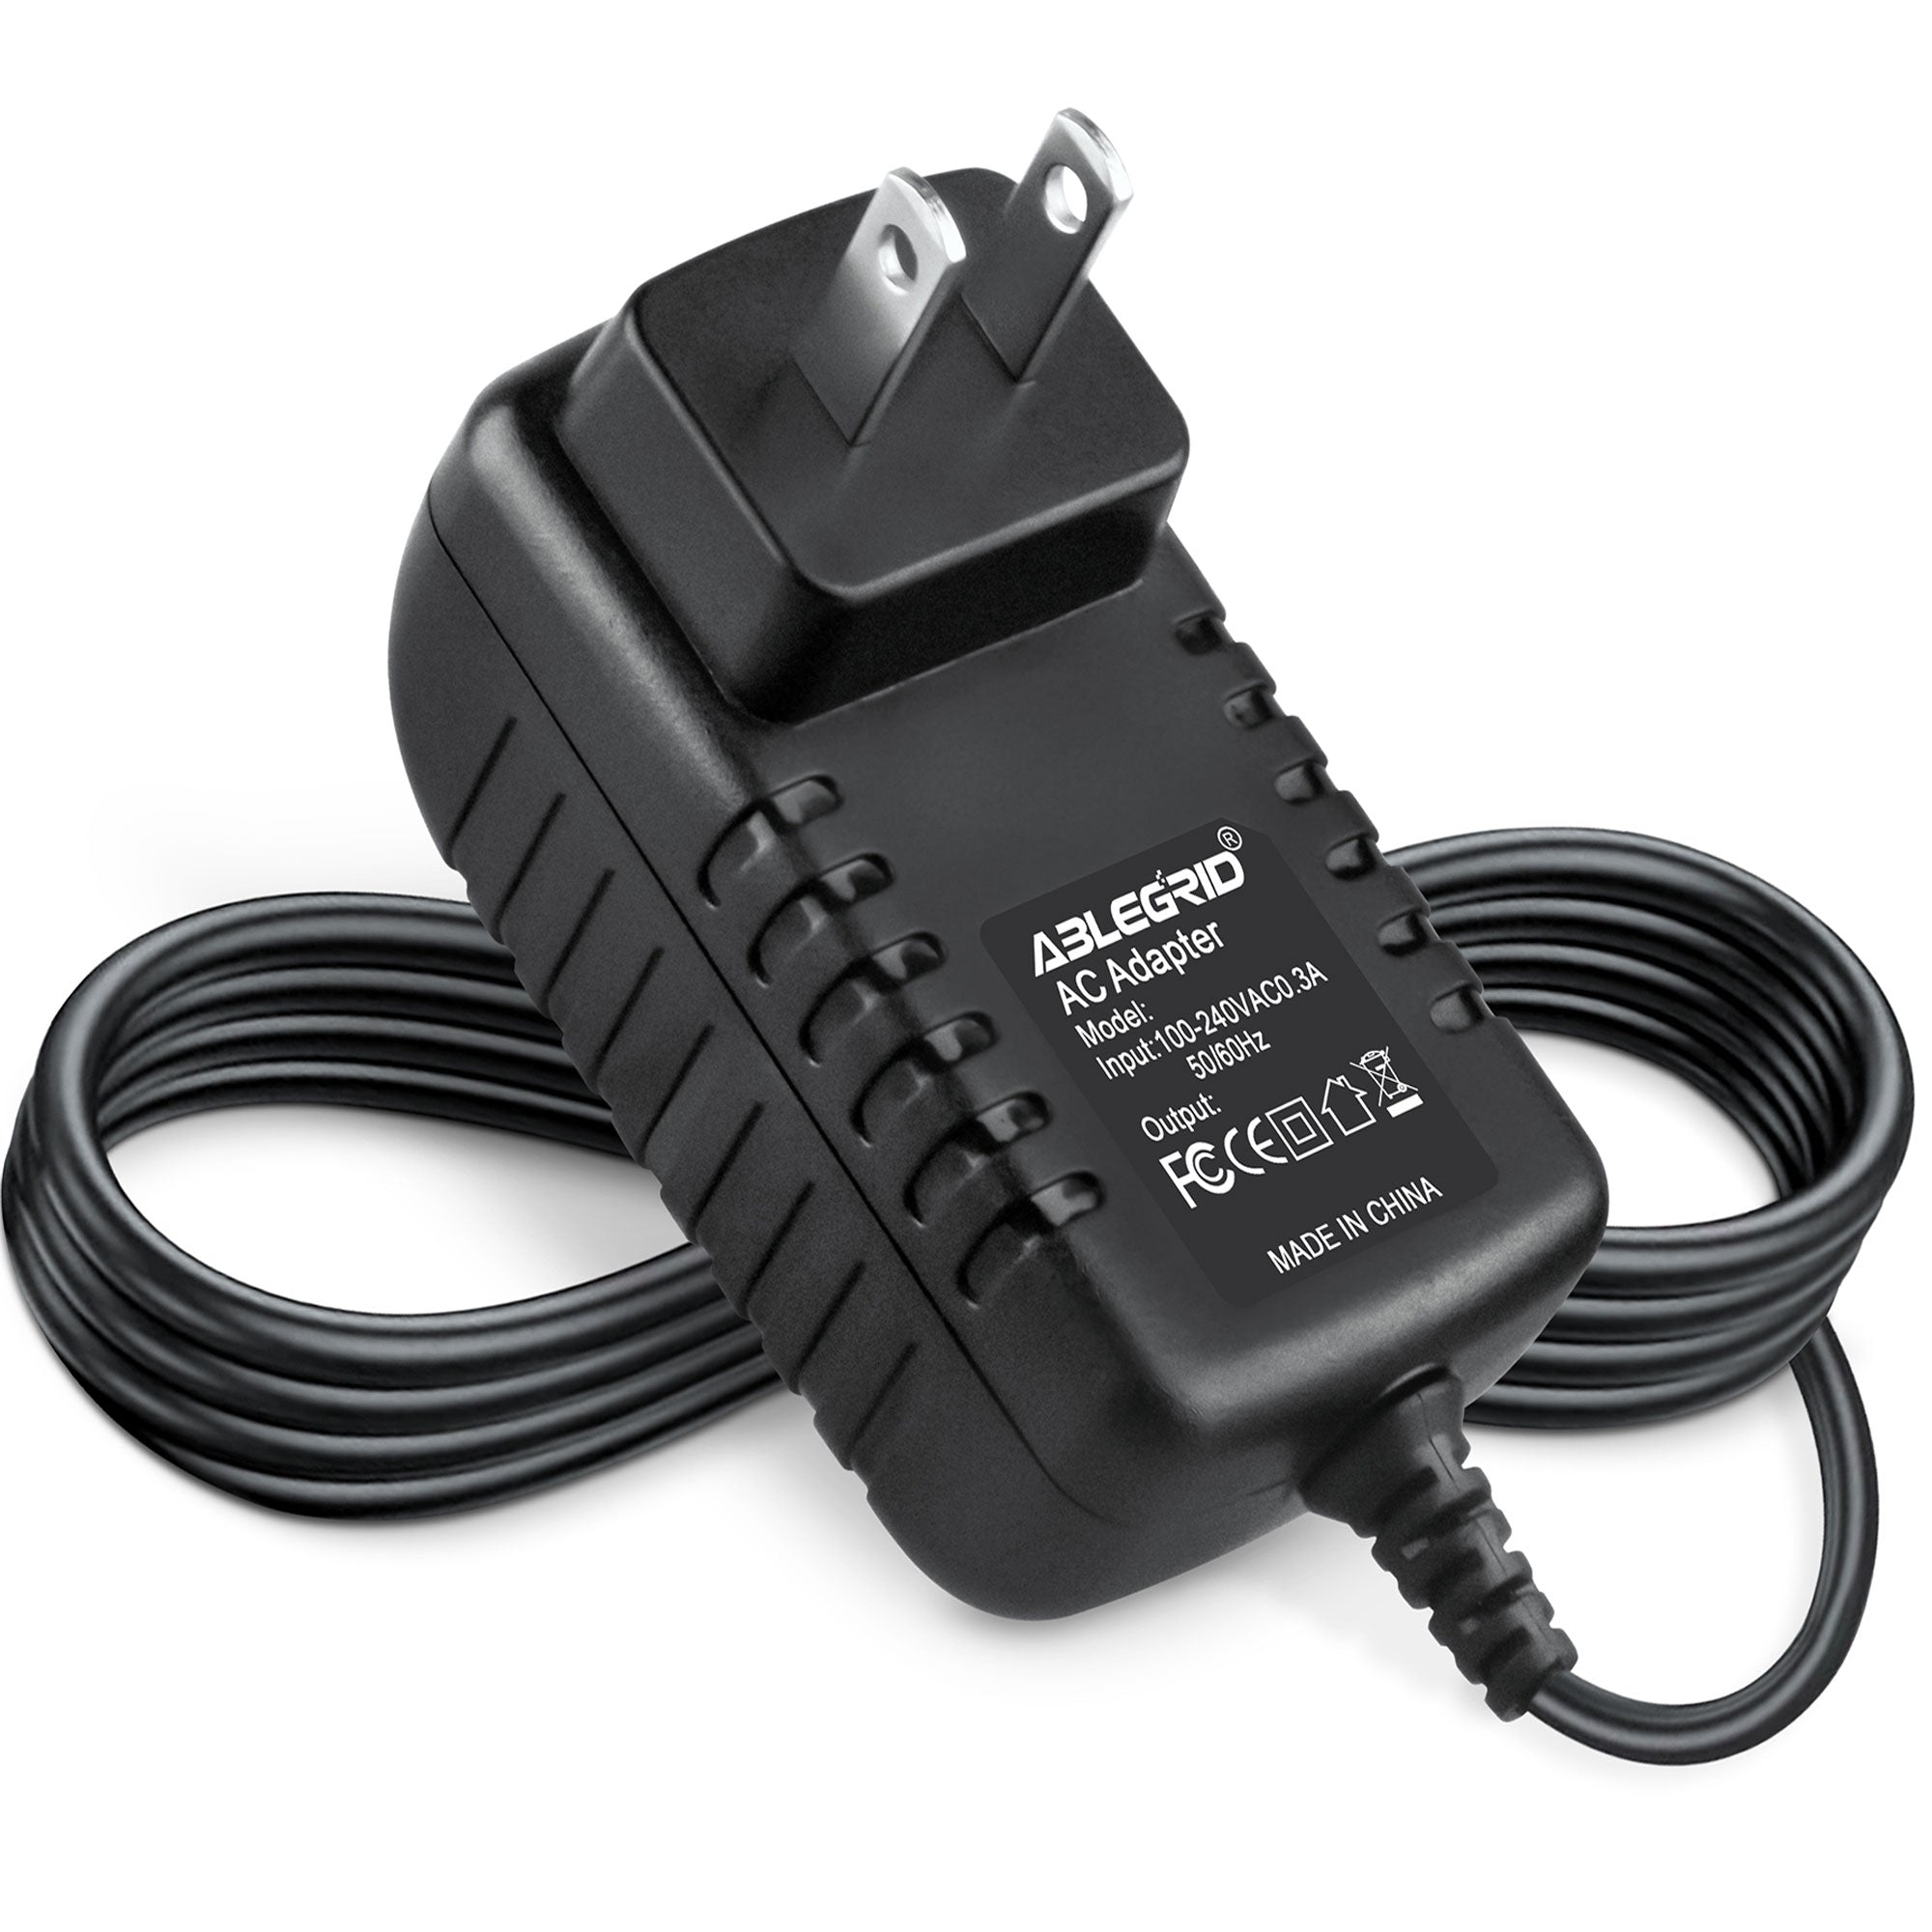 AbleGrid AC Adapter for HP ScanJet 5300 5370C 5300Cxi C7671B Scanner Power Supply PSU